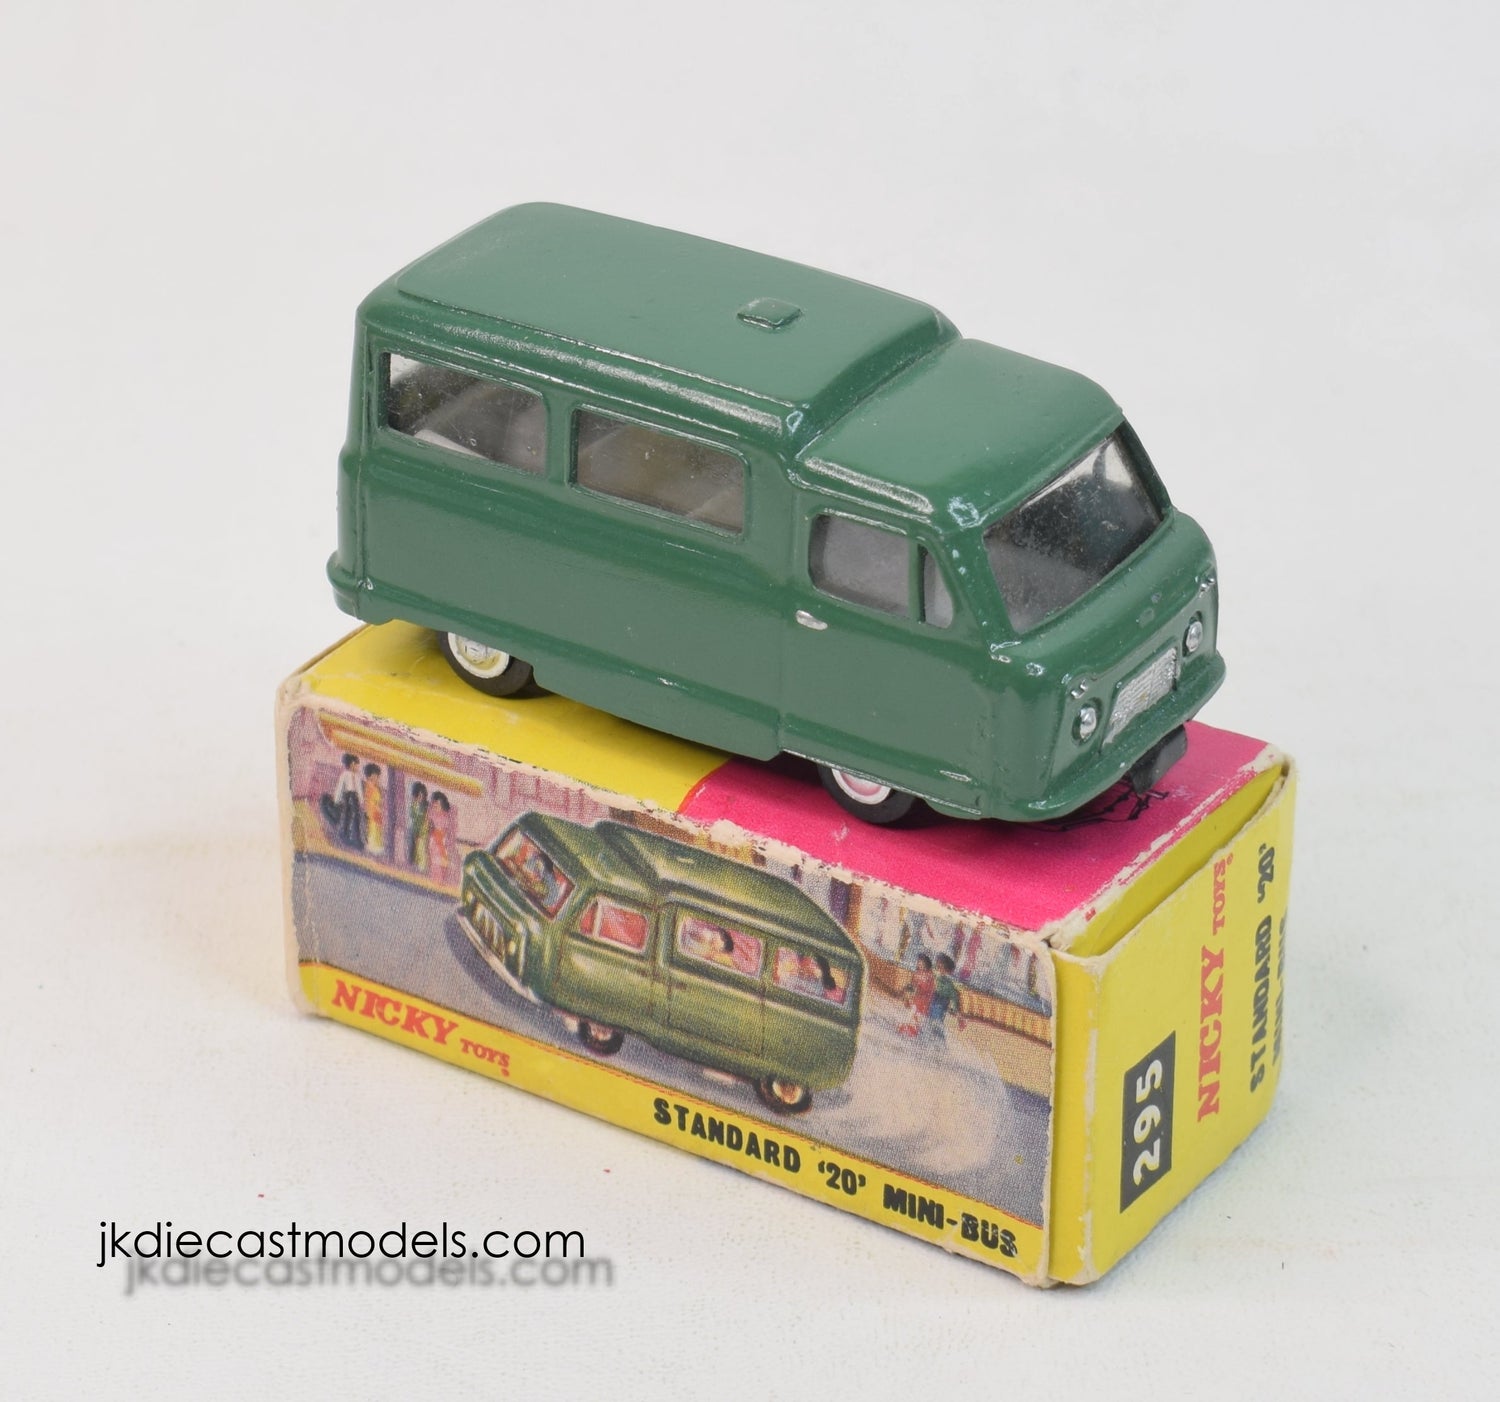 Nicky Toys 295 Standard '20' Mini-bus Very Near Mint/Boxed